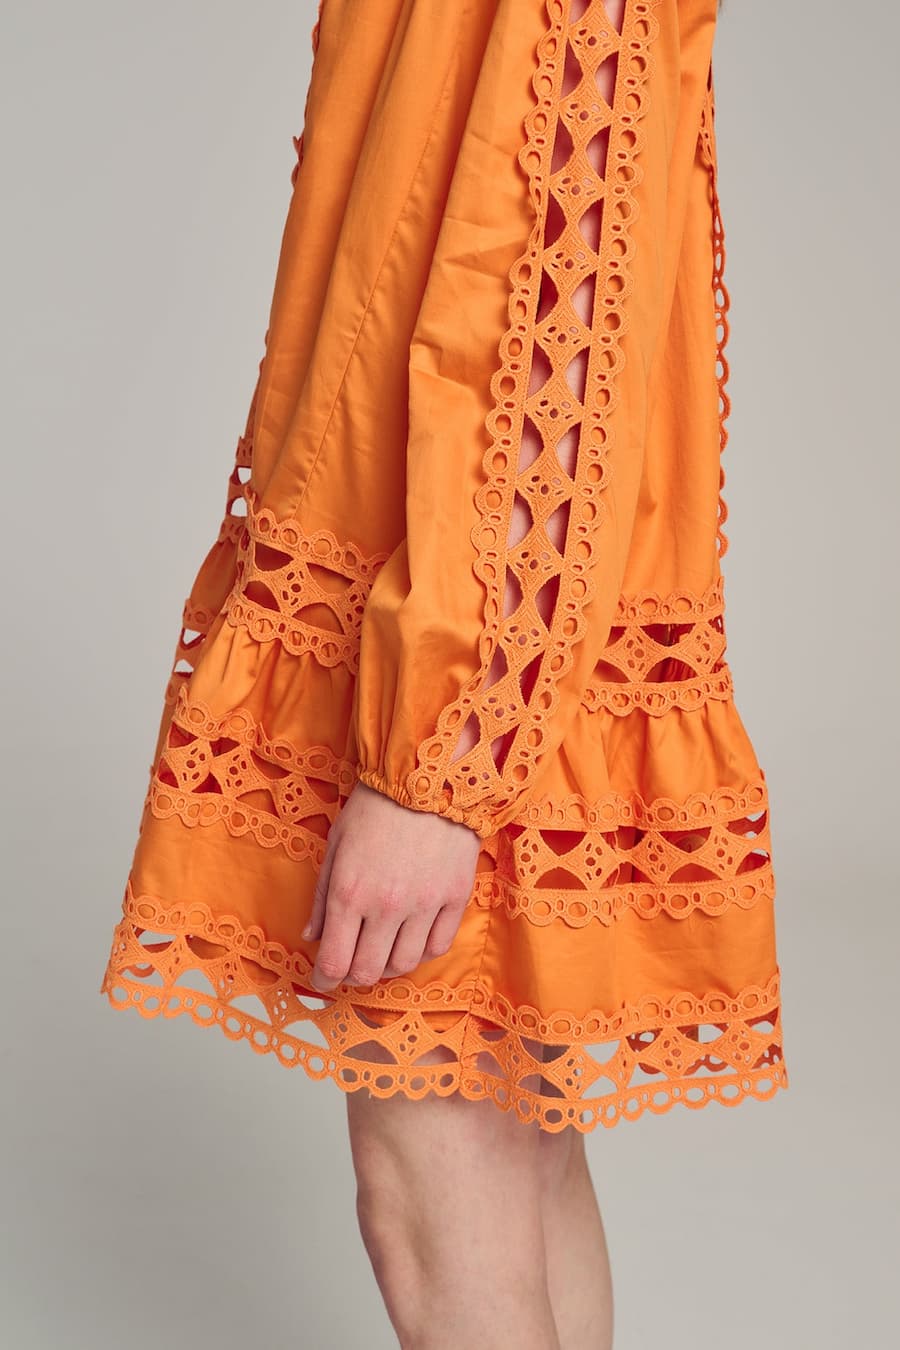 devotion-twins-dress-lace-dark-orange-midi-maou-2